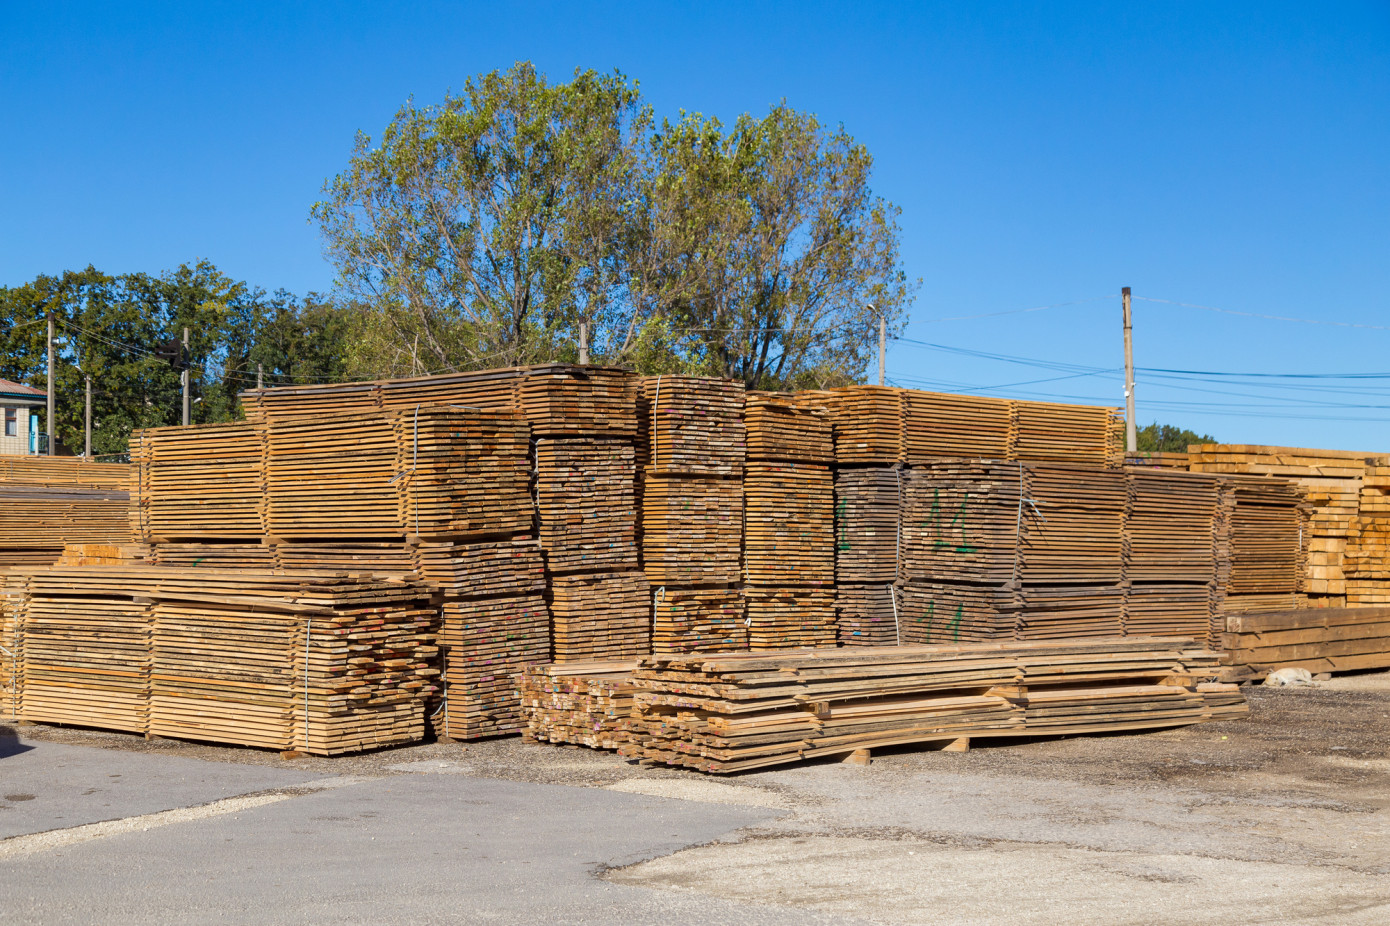 New Zealand export lumber price jump 38% in August 2021